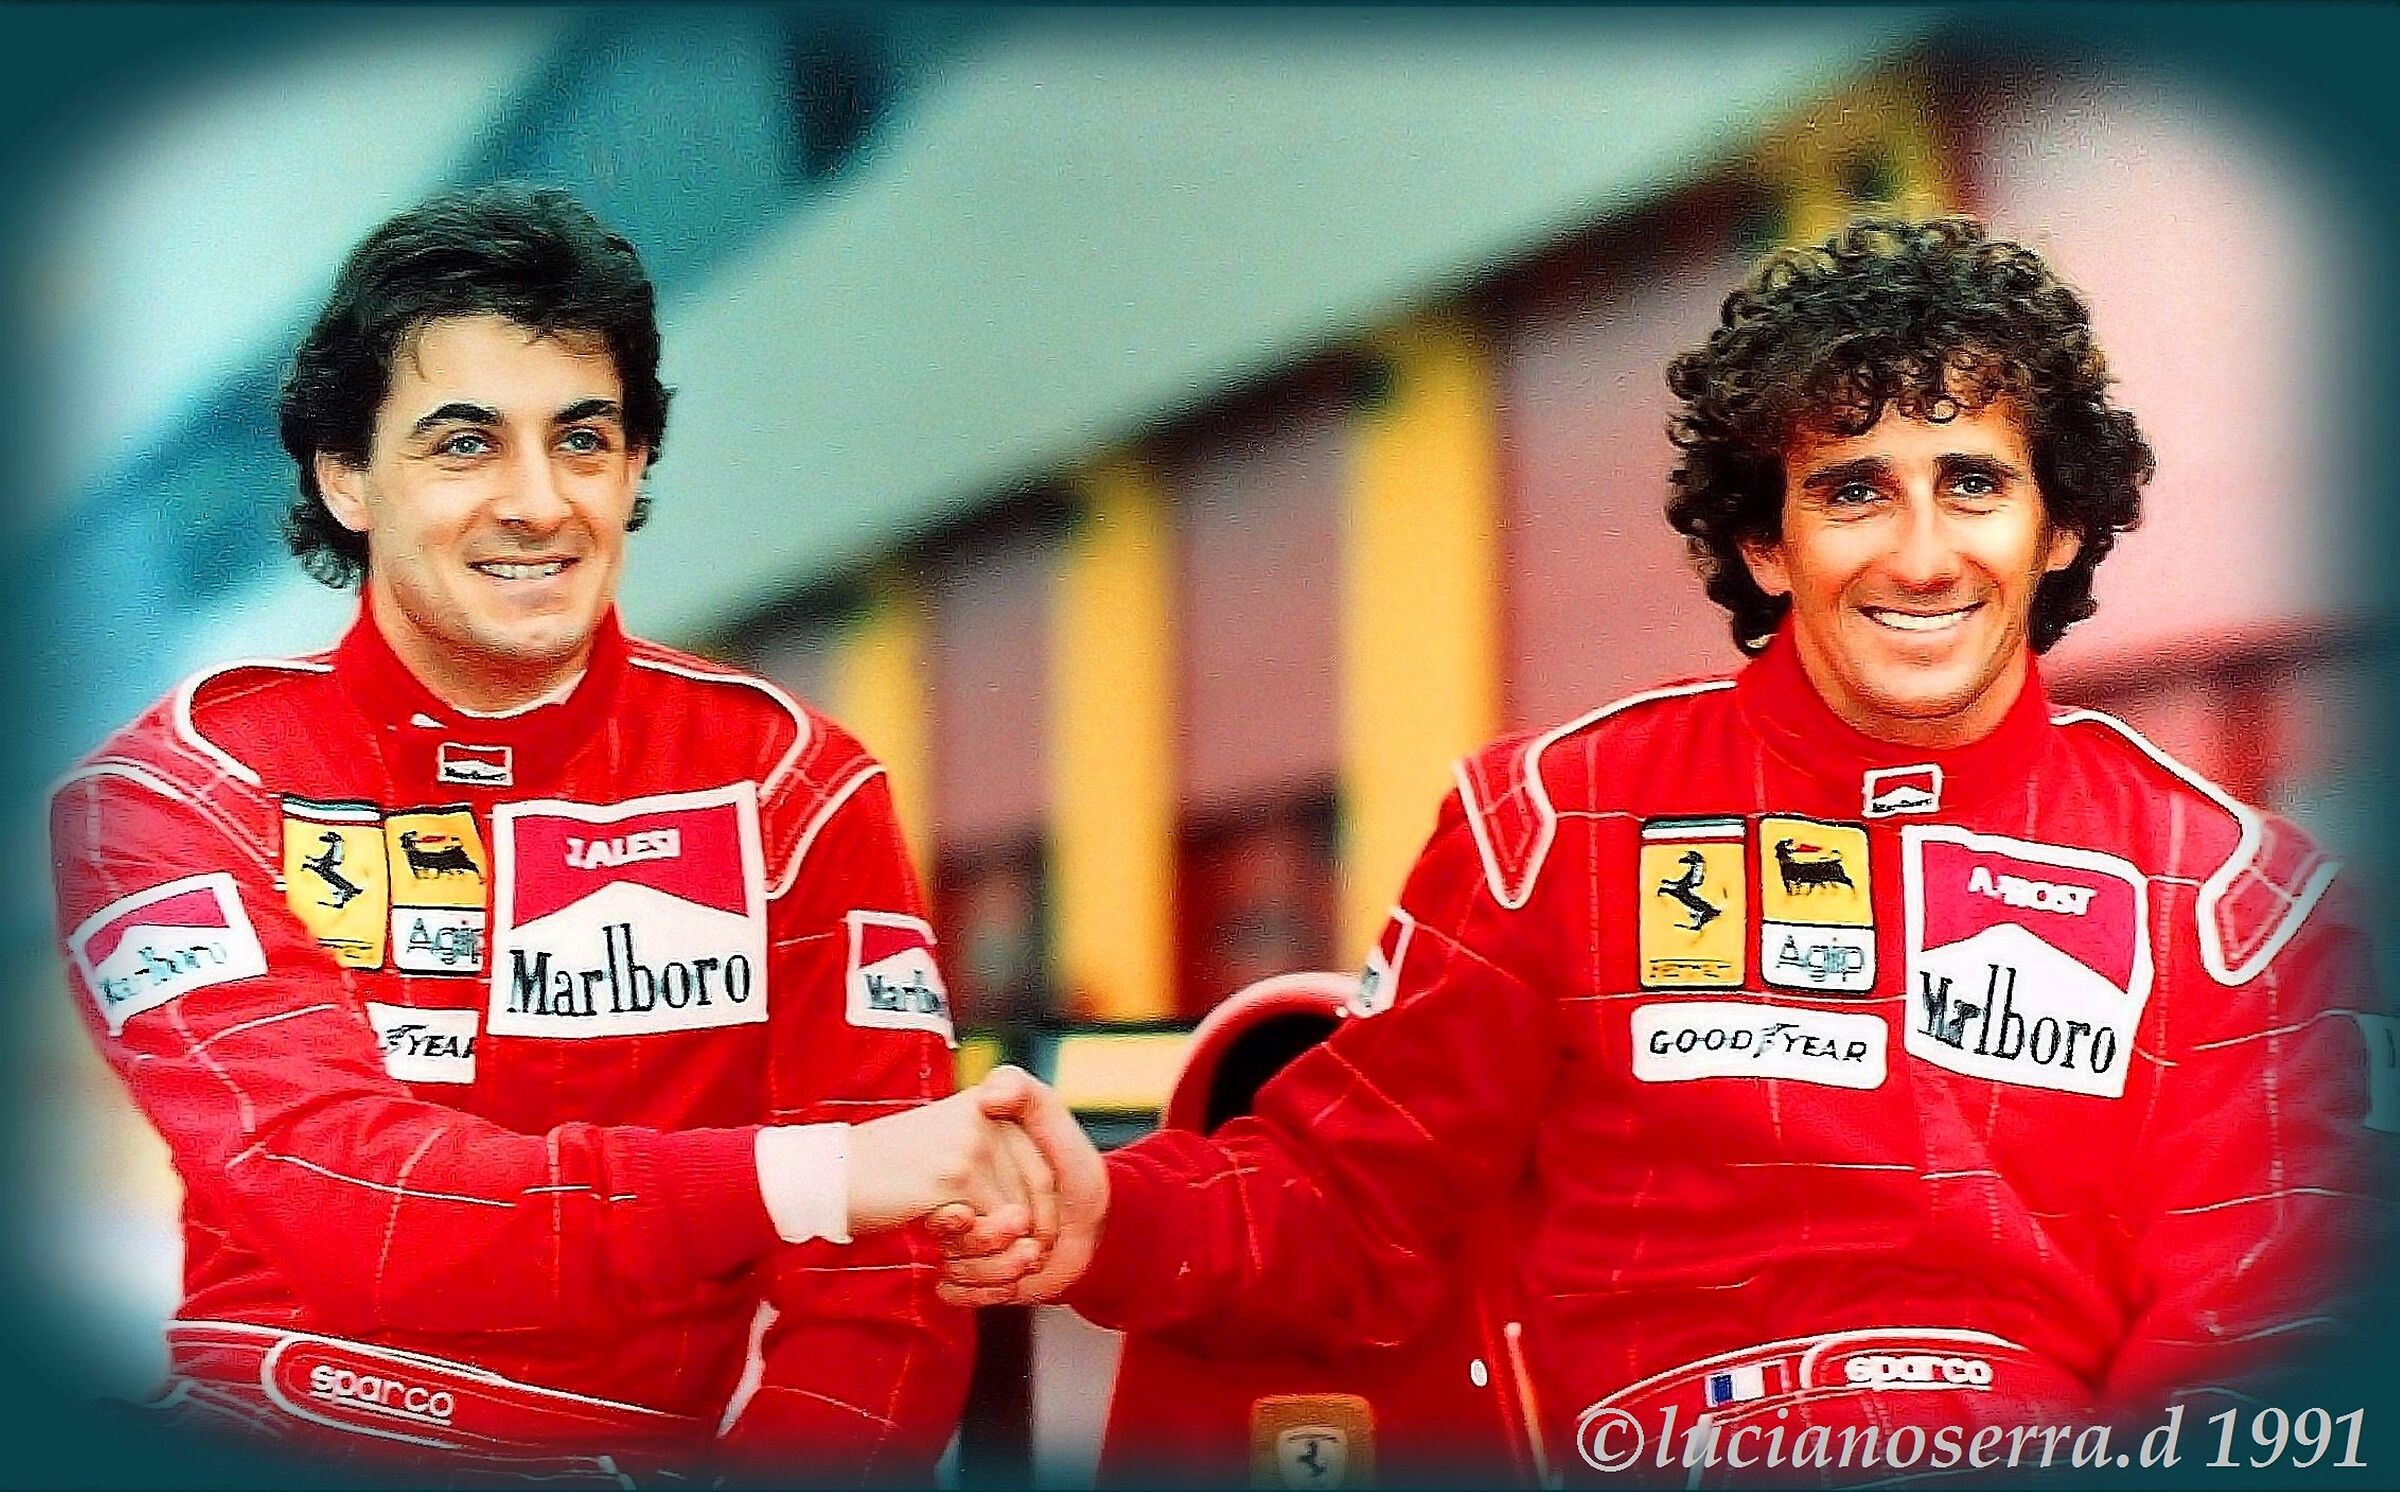 Jean Alesì and Alain Prost Ferrari drivers in 1991...